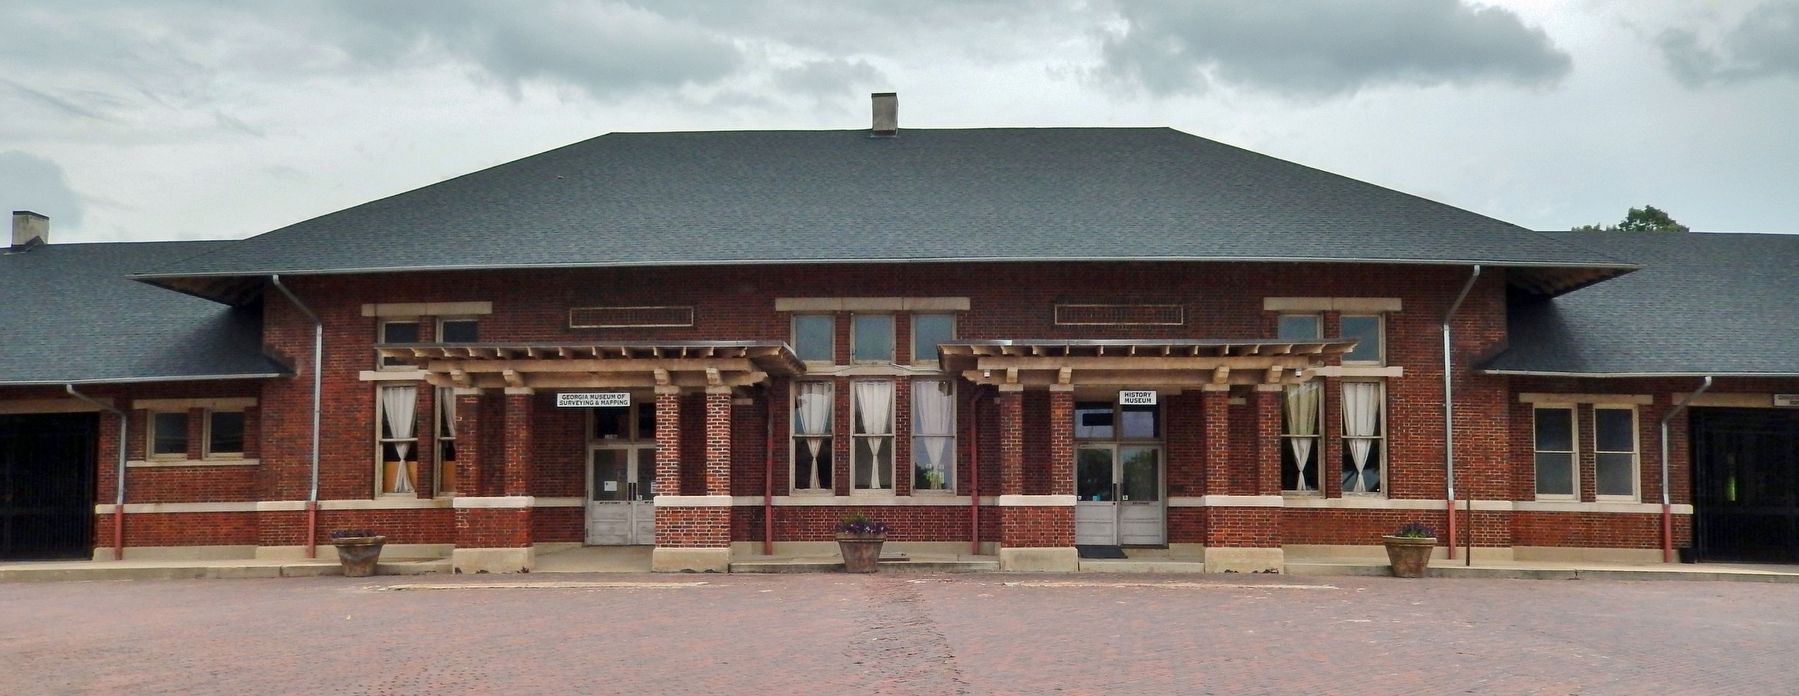 Union Station Depot (<i>west elevation</i>) image. Click for full size.